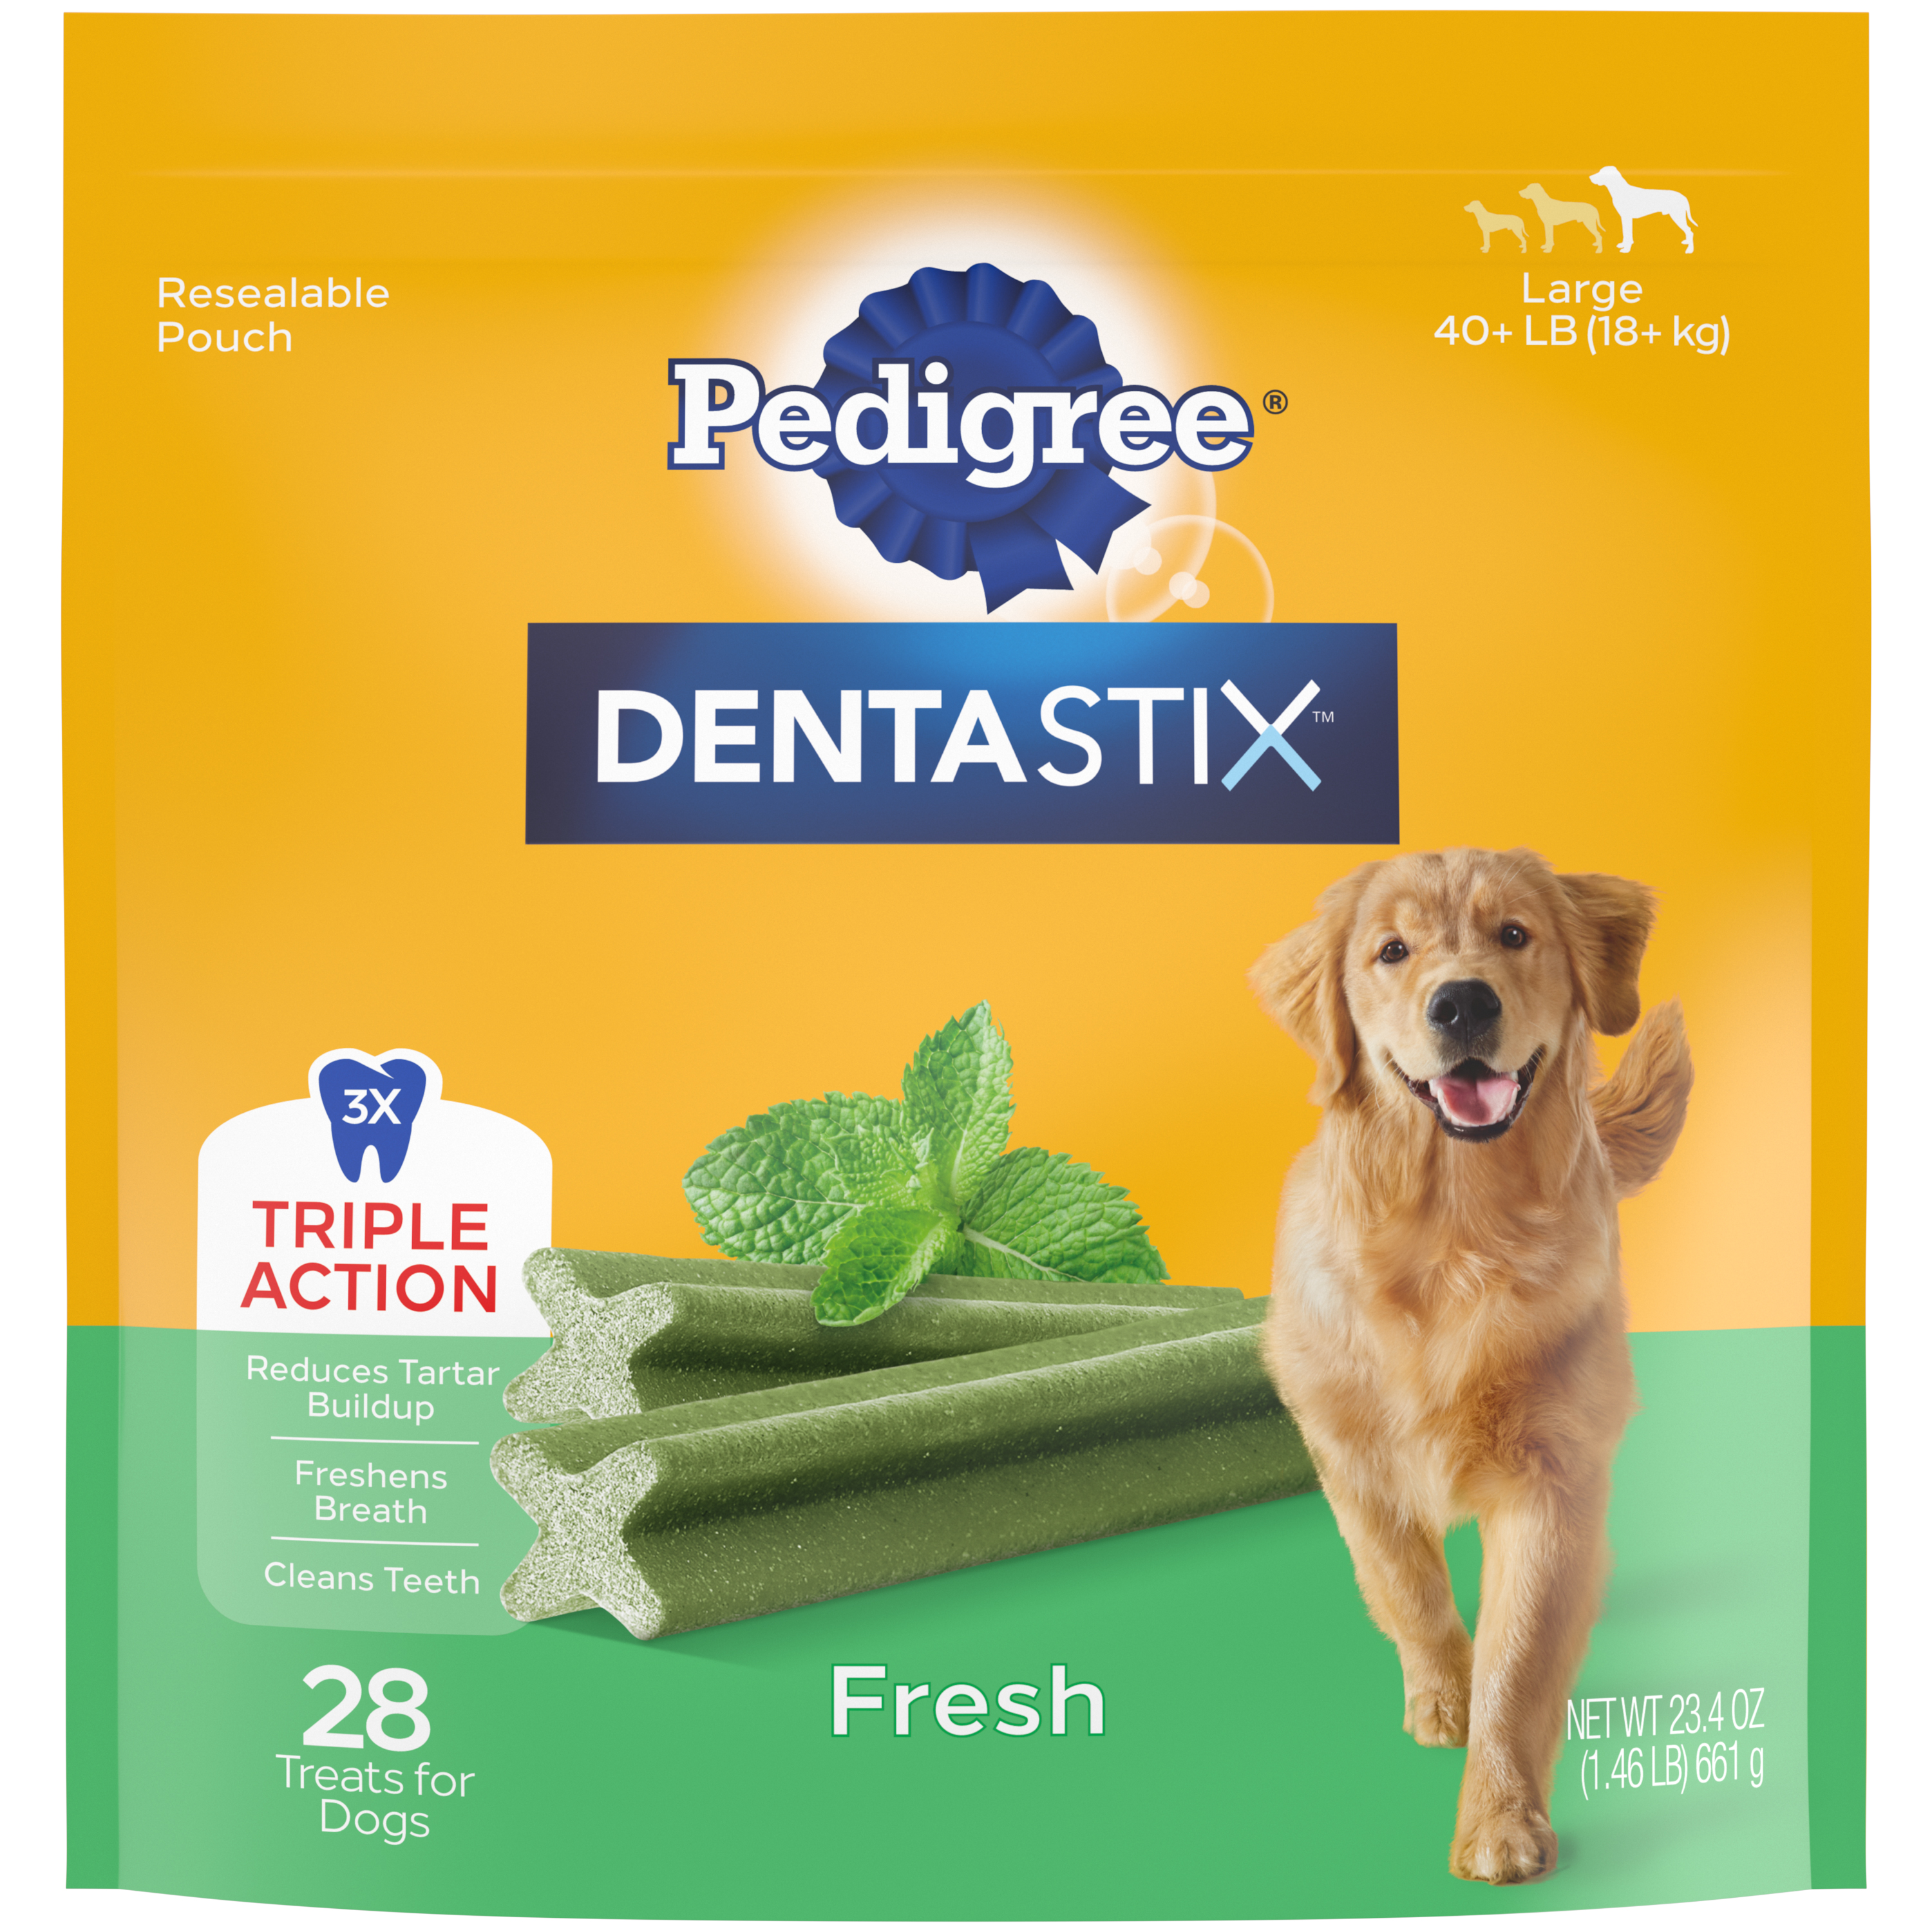 1.46# Pedigree Dentastix Fresh Large 28ct - Treats